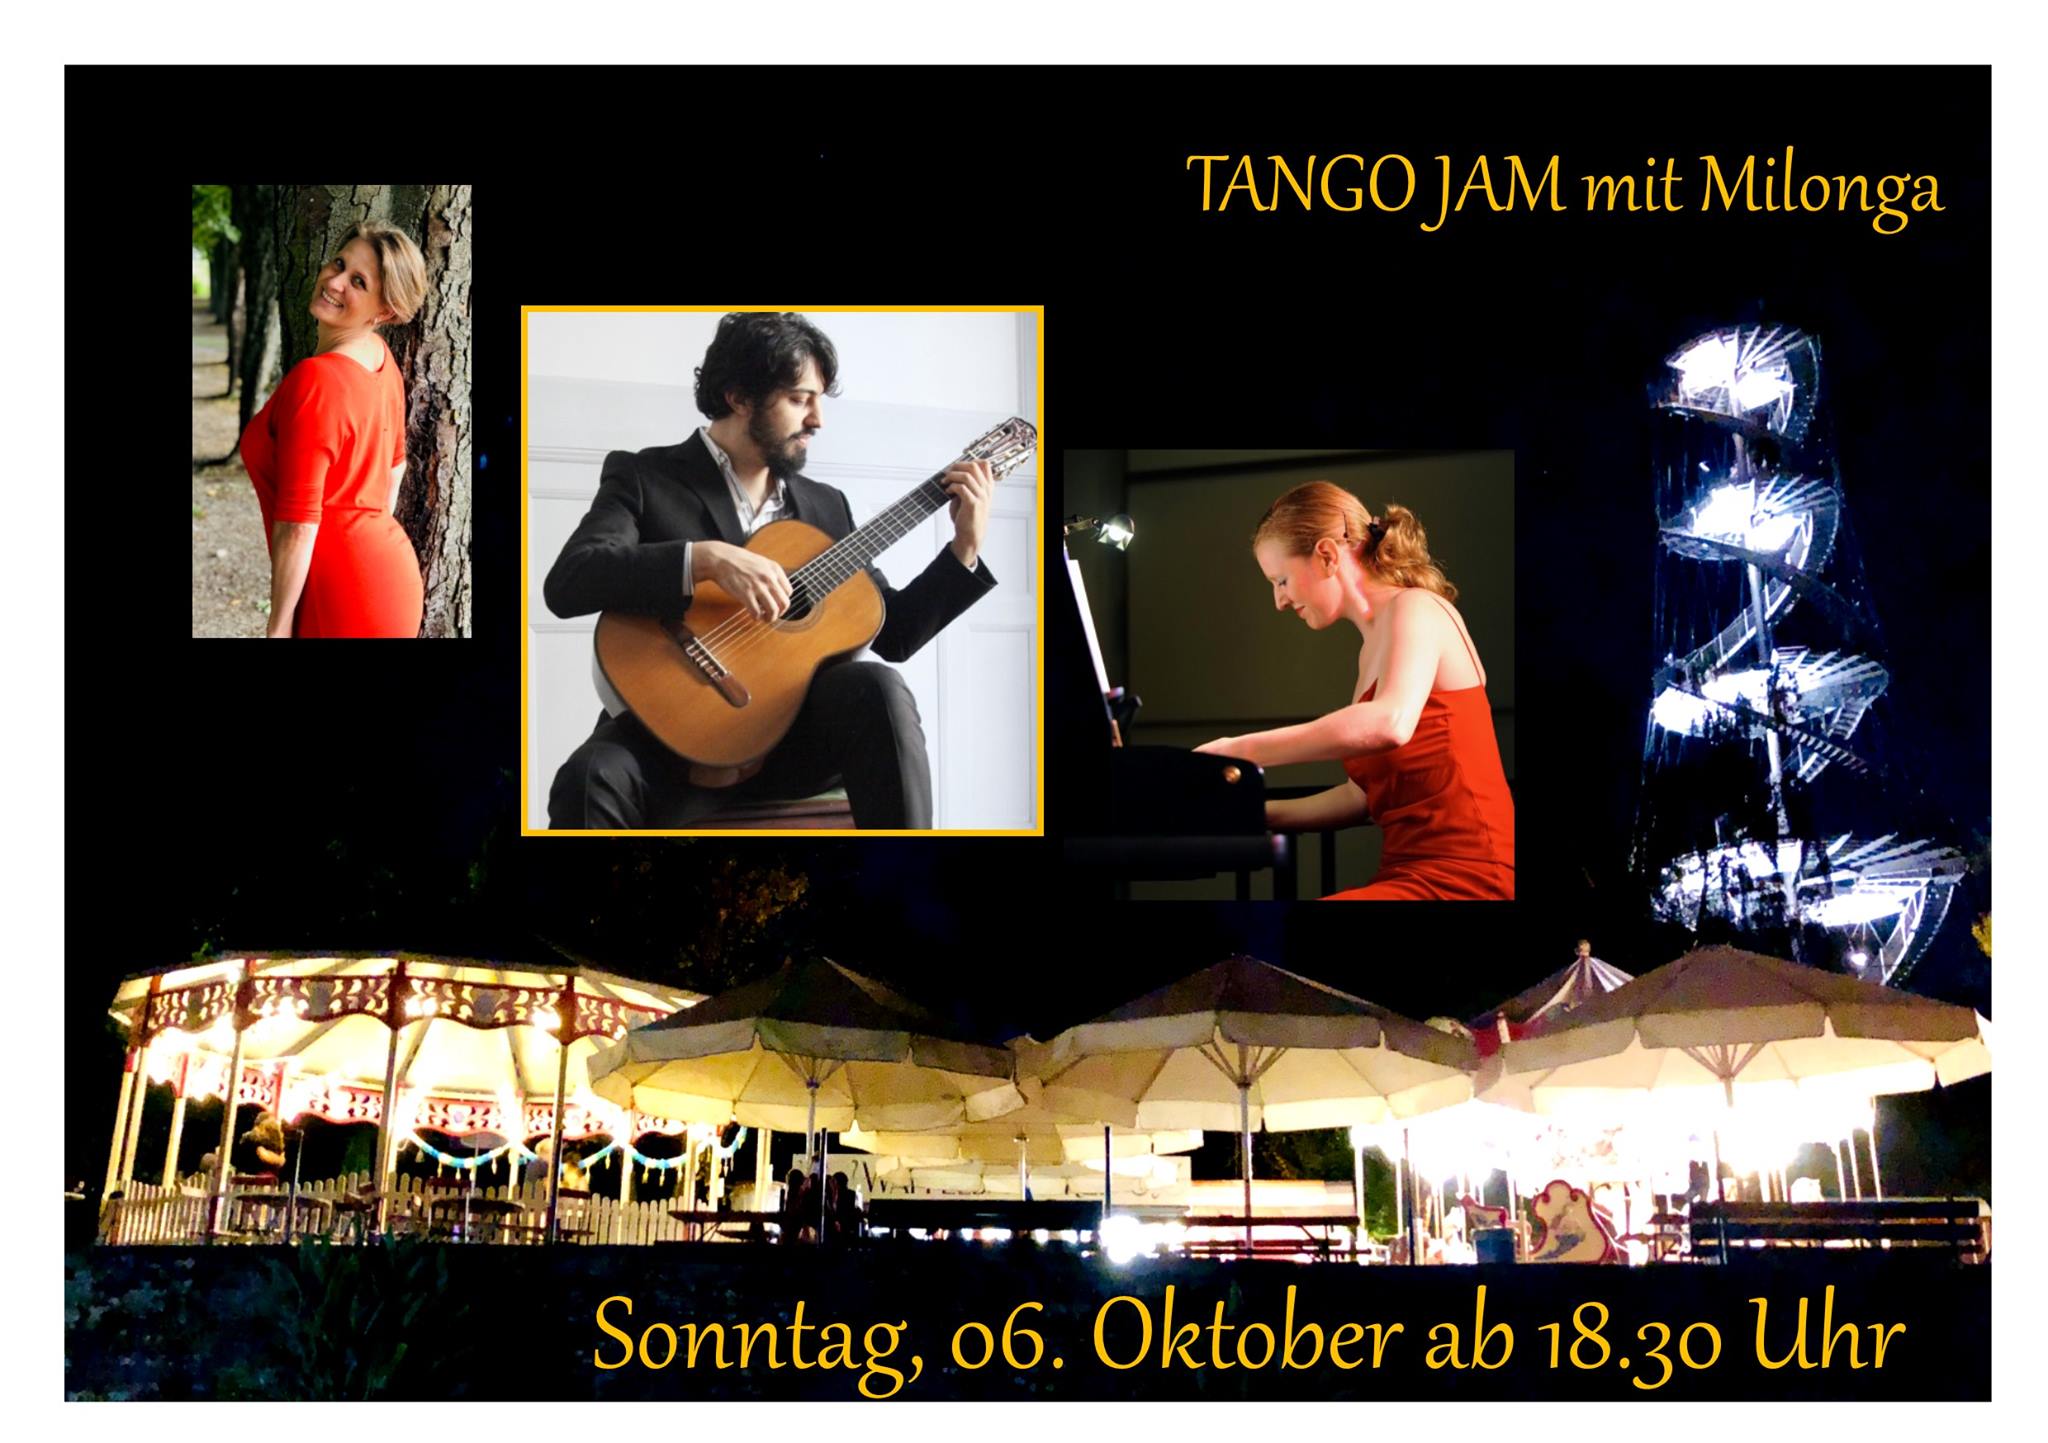 Amores Tango - Musik, Tango, Milonga, Stuttgart, Killesberg